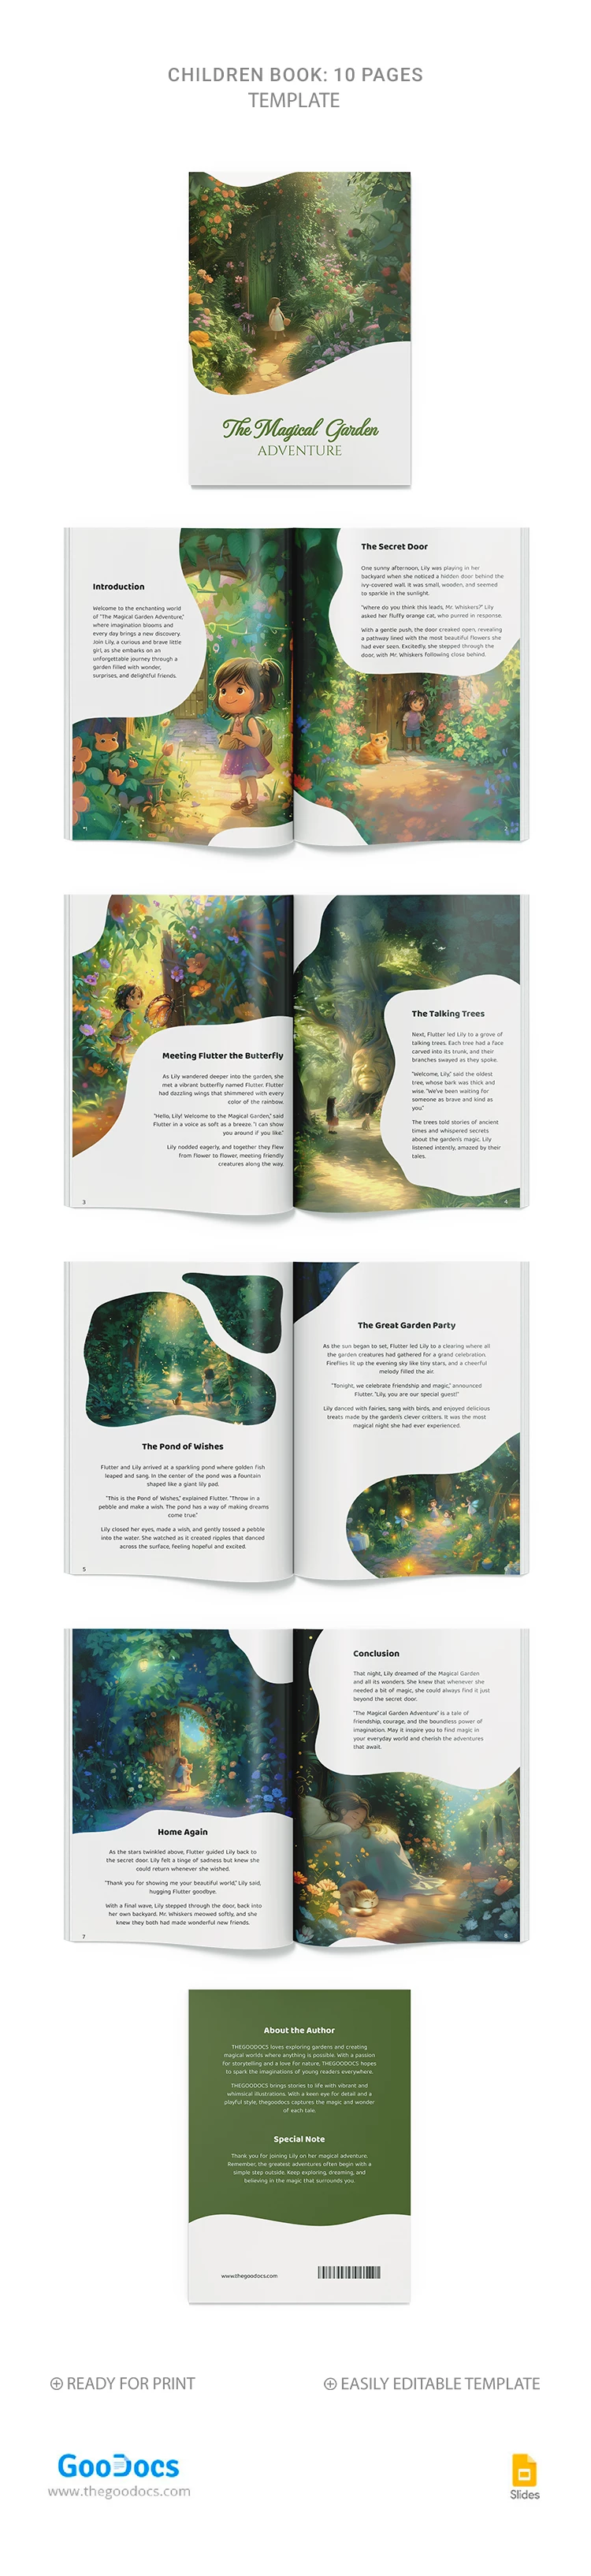 Kreatives Kinderbuch - free Google Docs Template - 10068736